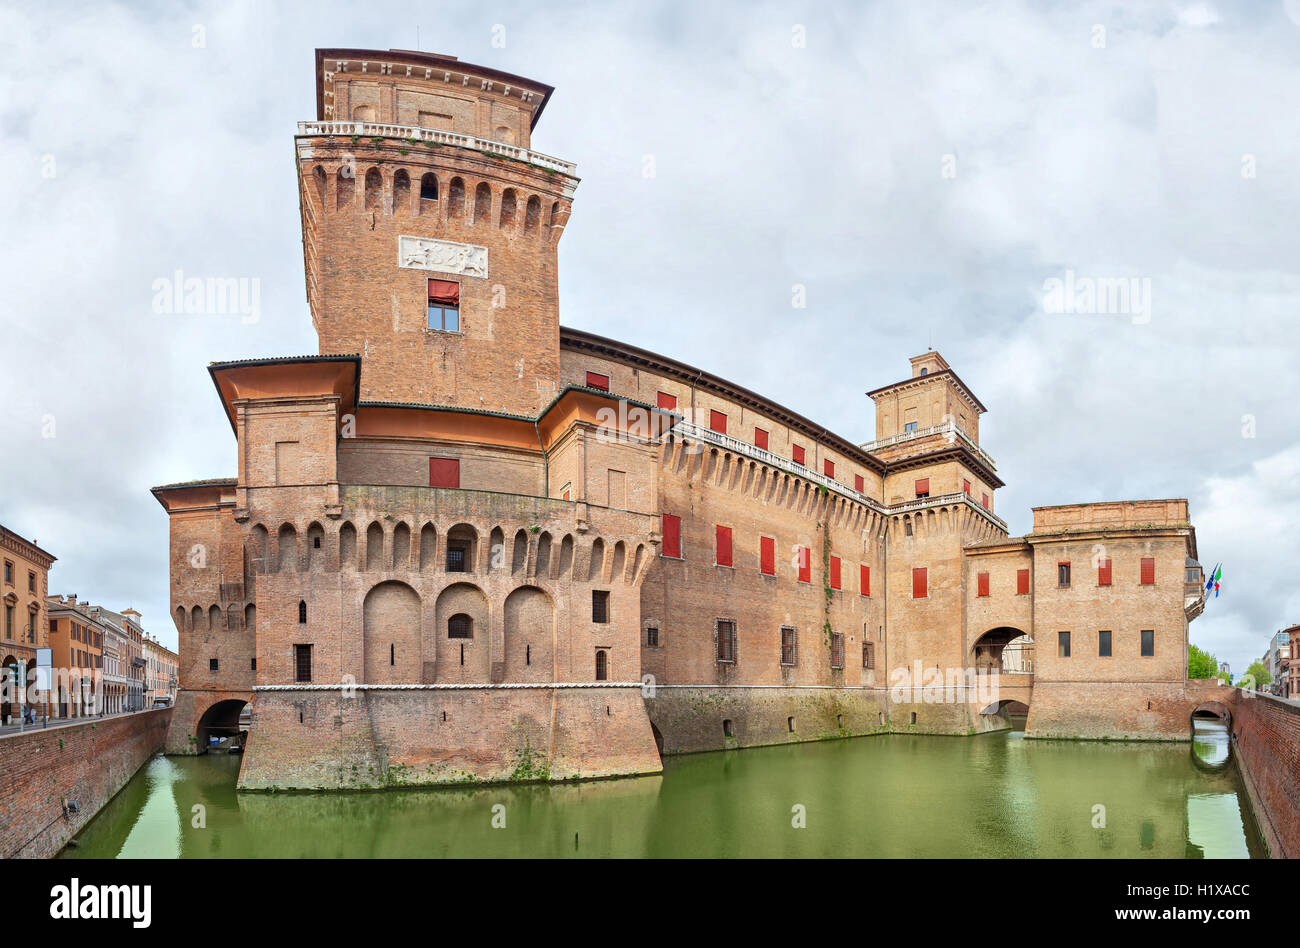 Estense castle in the center of Ferrara, Emilia-Romagna, Italy Stock Photo